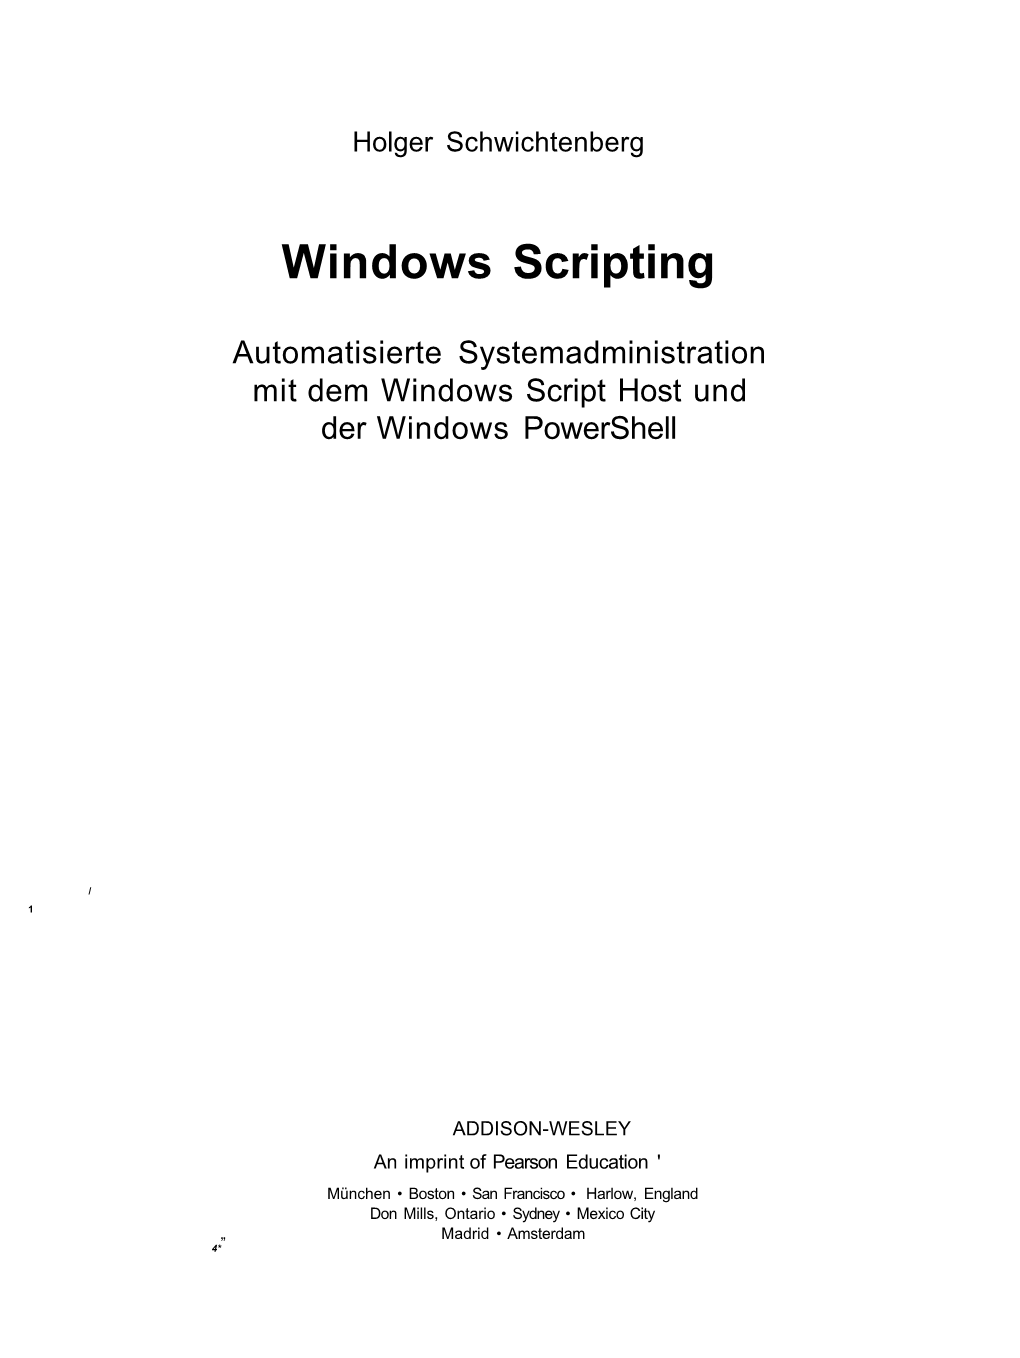 Windows Scripting